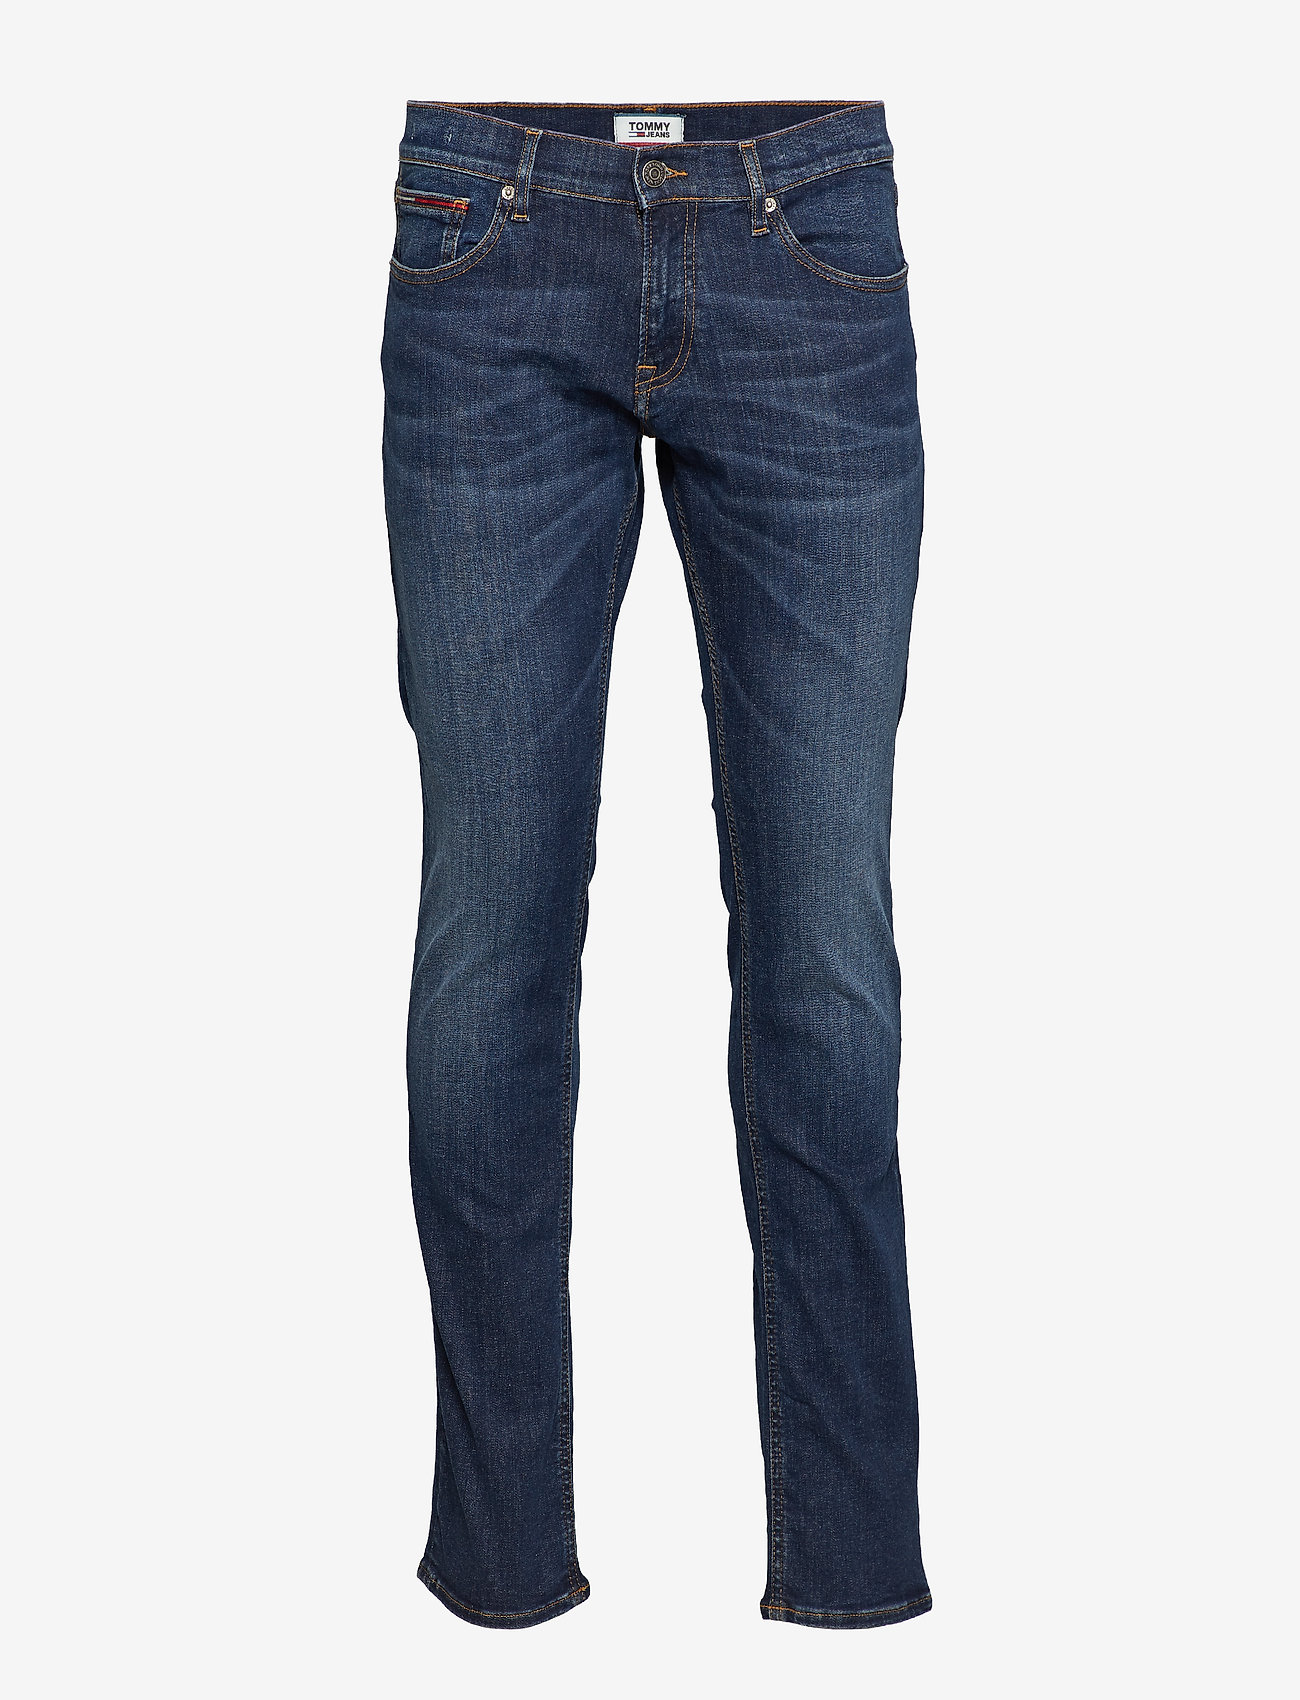 jeans scanton dynamic stretch,reepinorlifescience.com